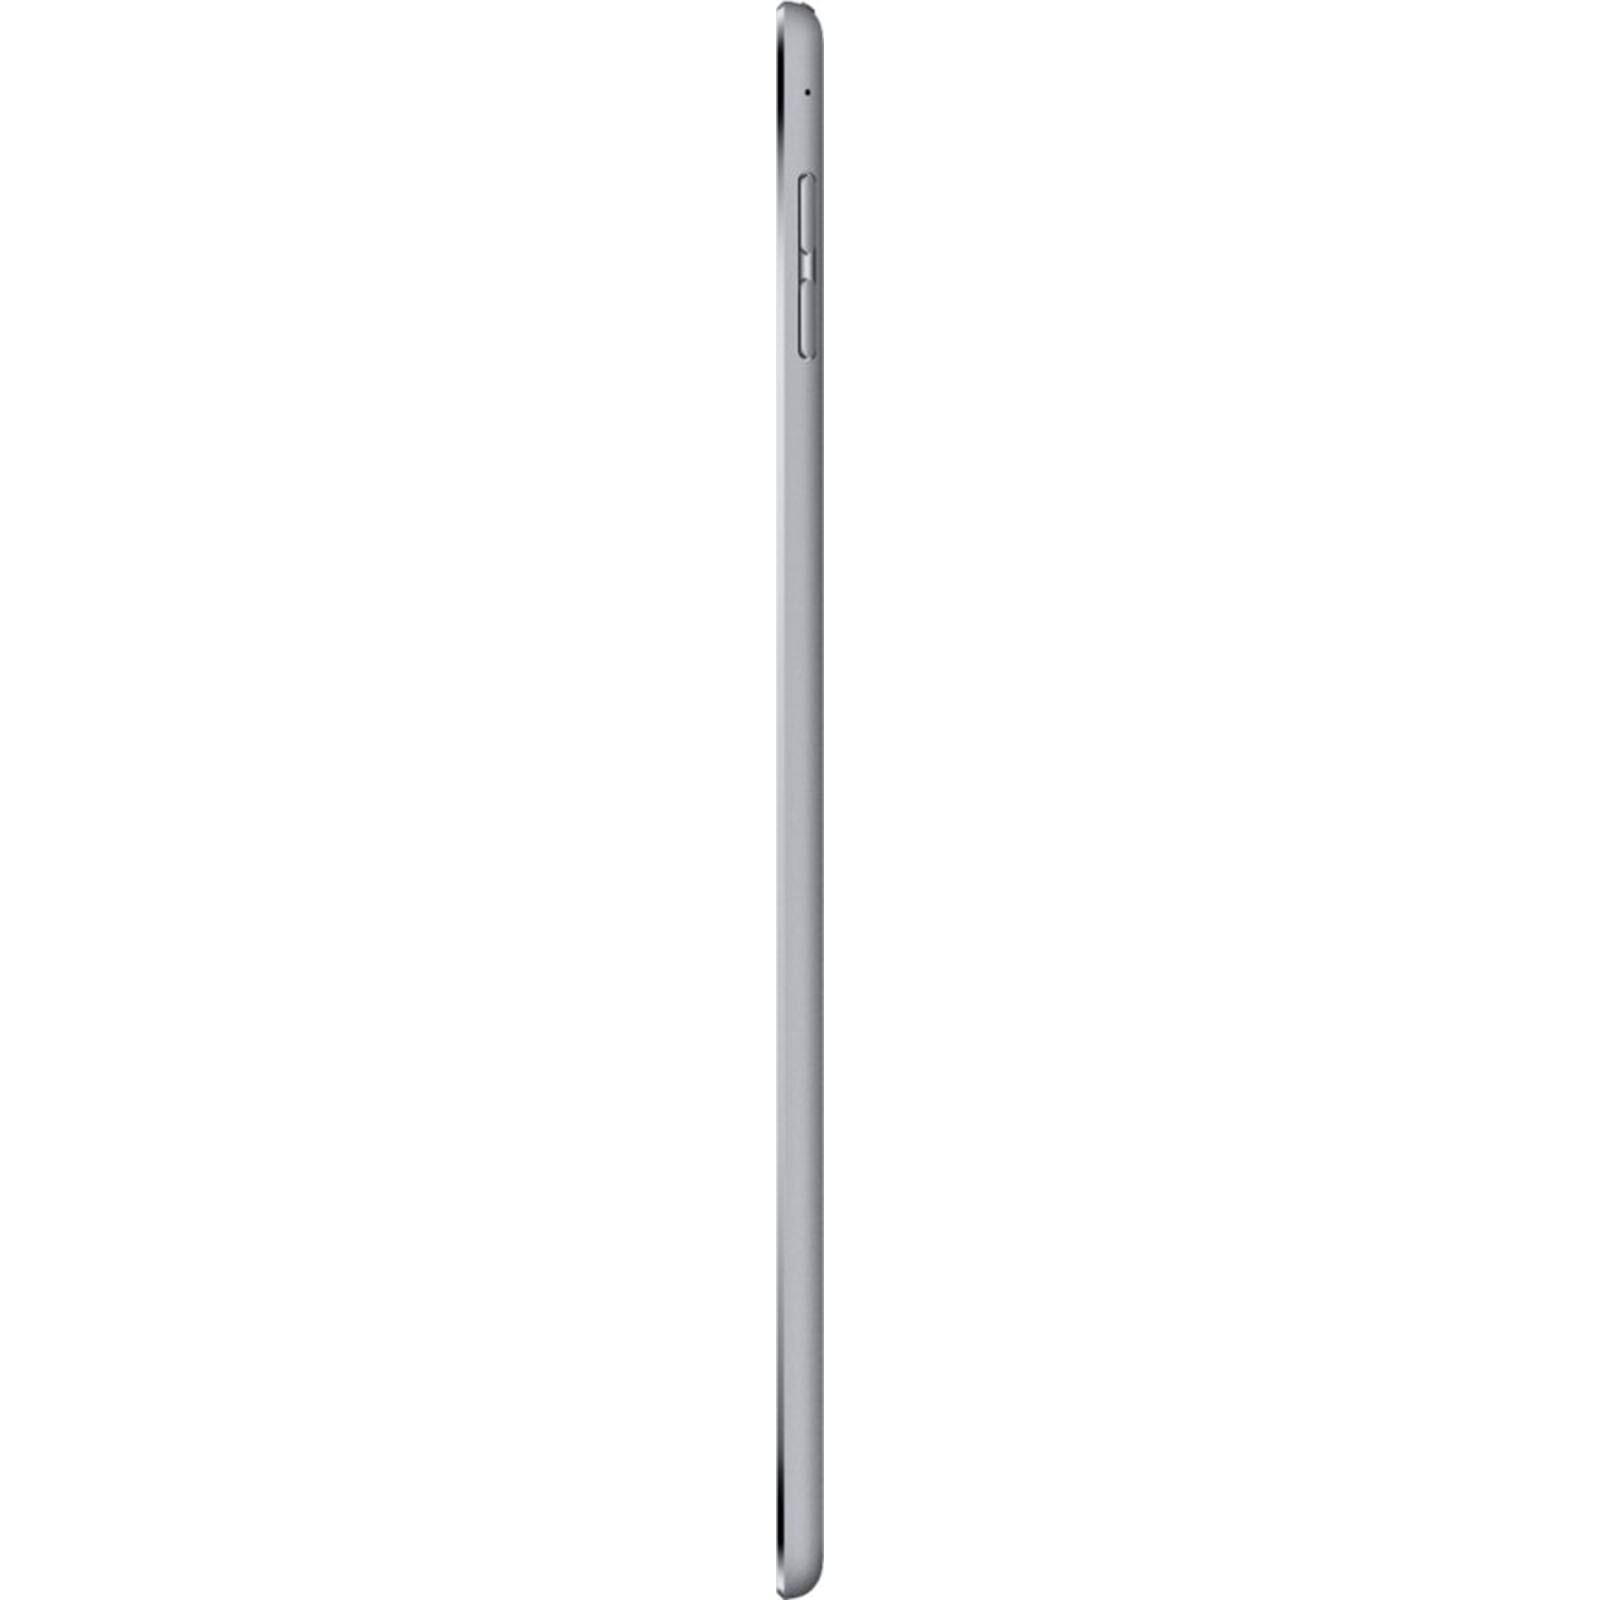 Restored Apple iPad Mini 4 64GB Tablet (Gray) (Refurbished) - image 5 of 5